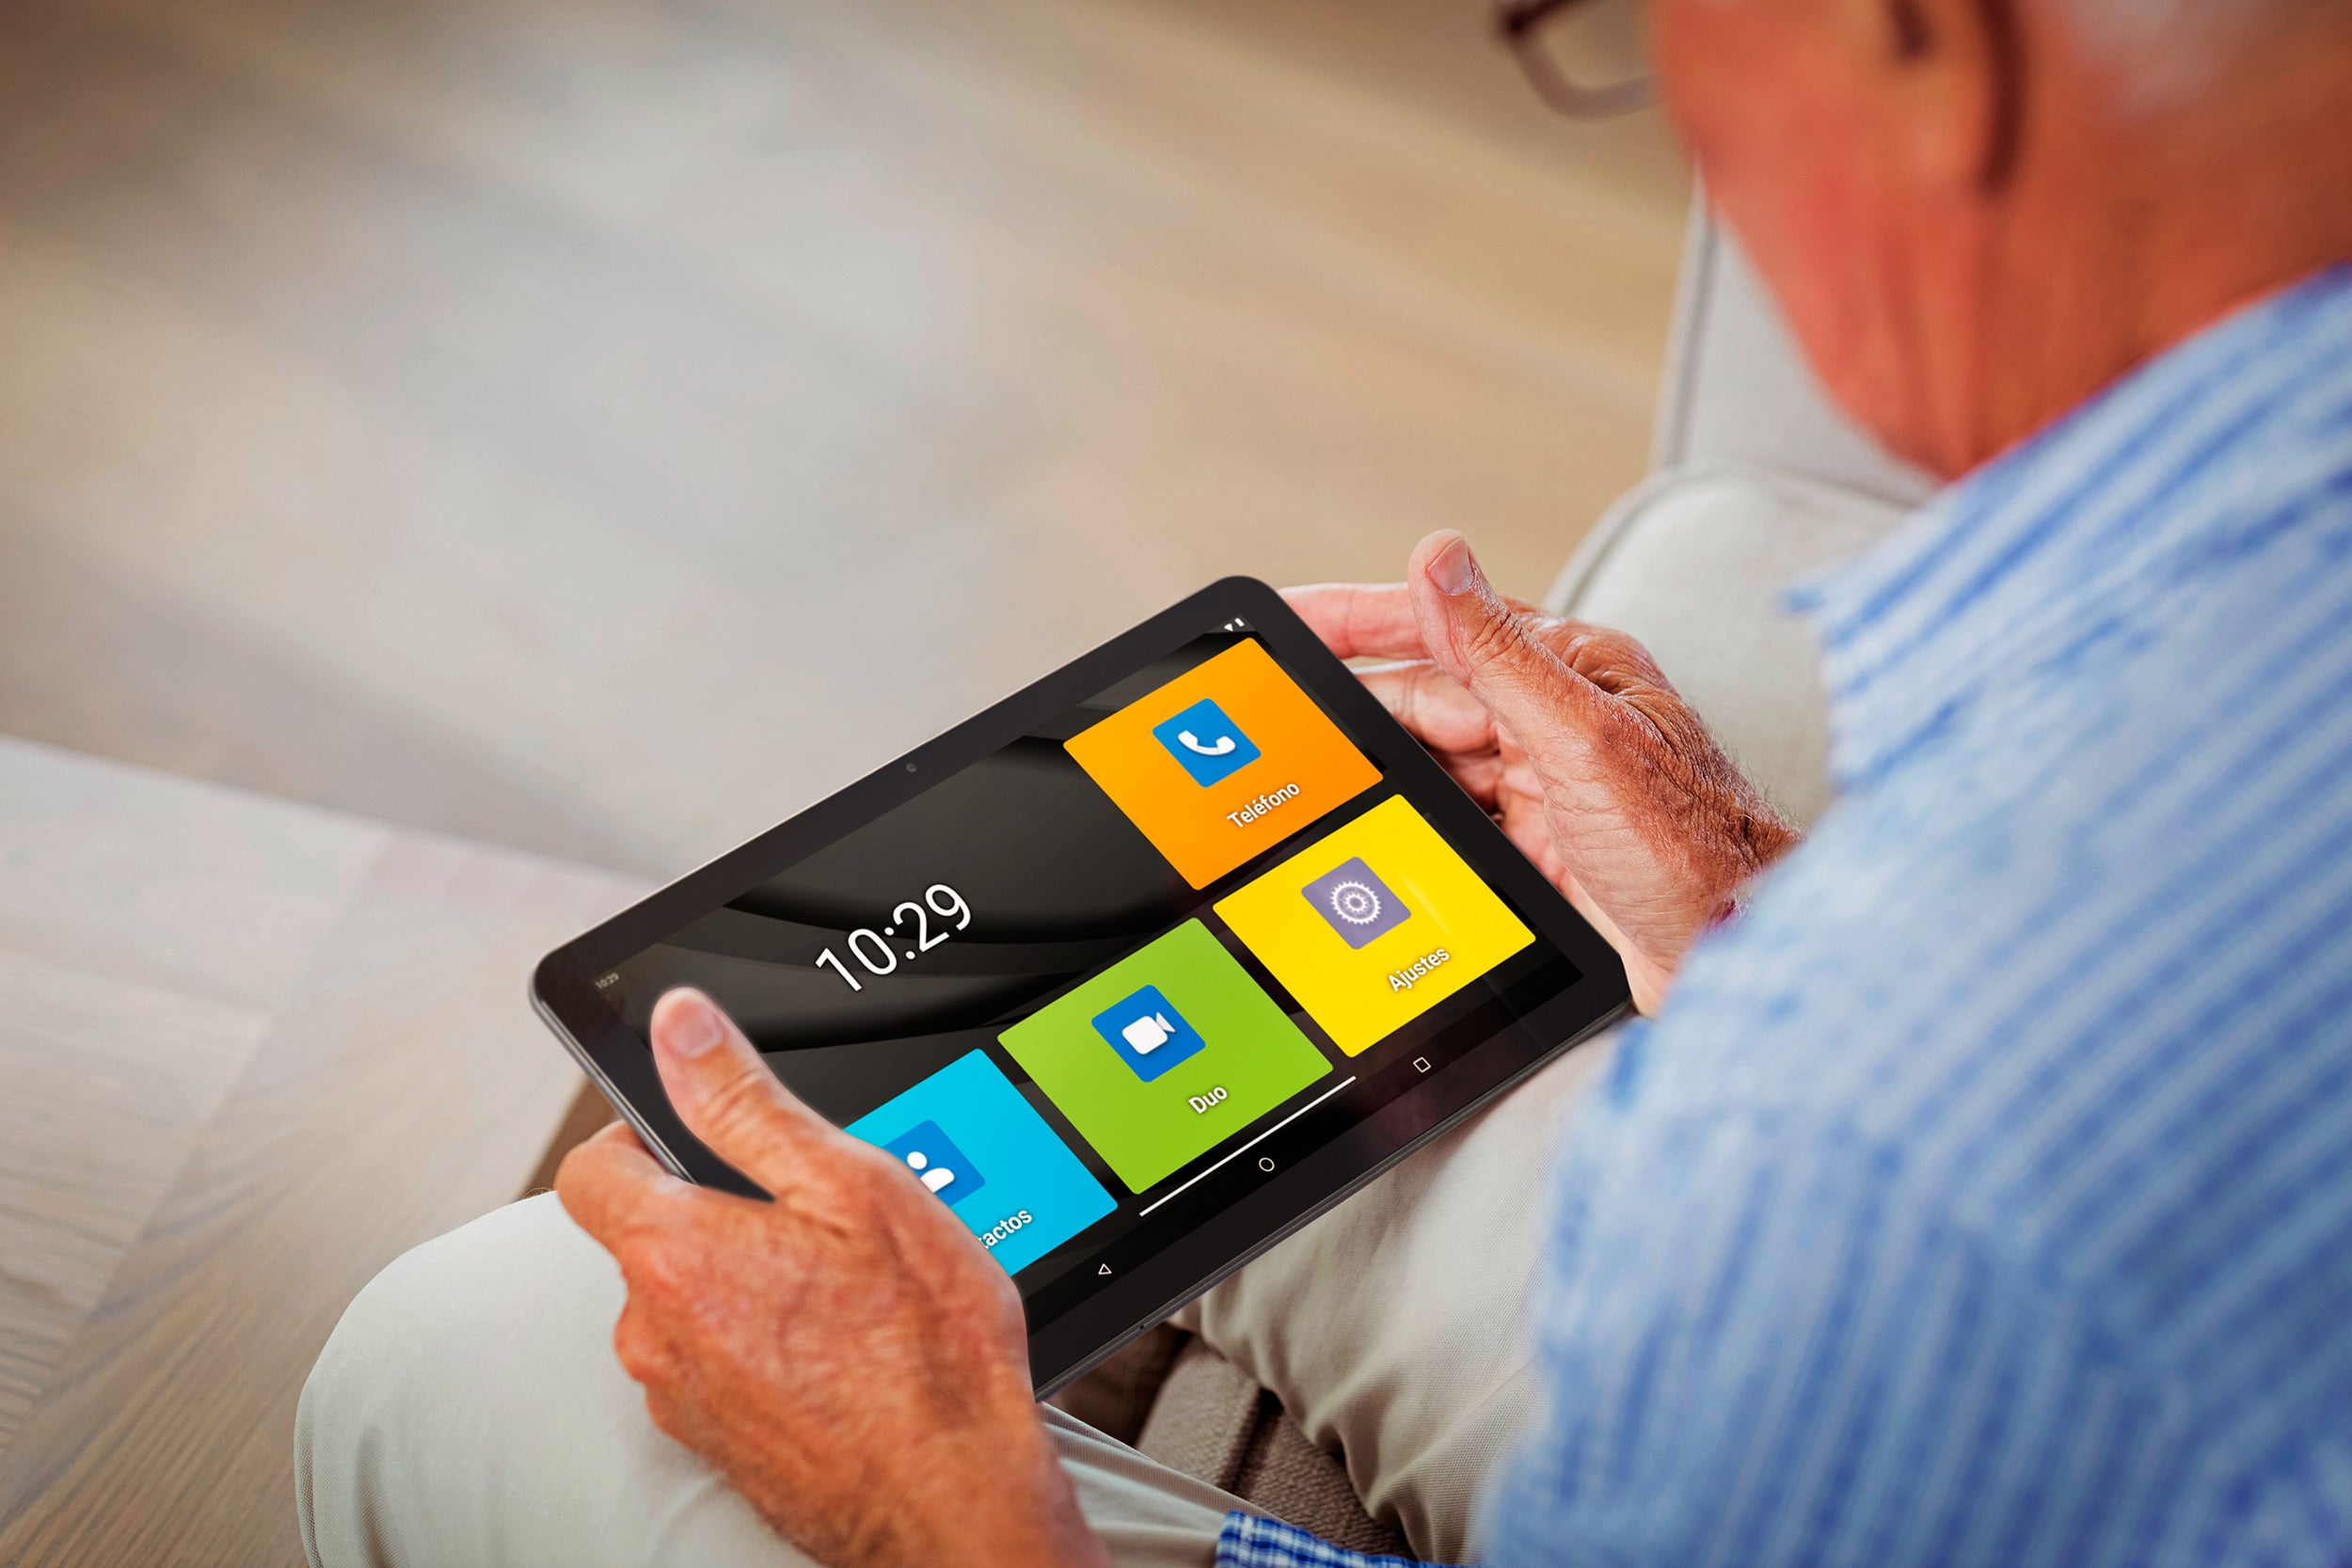 Tableta para personas mayores con capacidades de teléfono, 4G LTE, cargador  inalámbrico, lápiz capacitivo, plan de servicio premium de 1 mes incluido